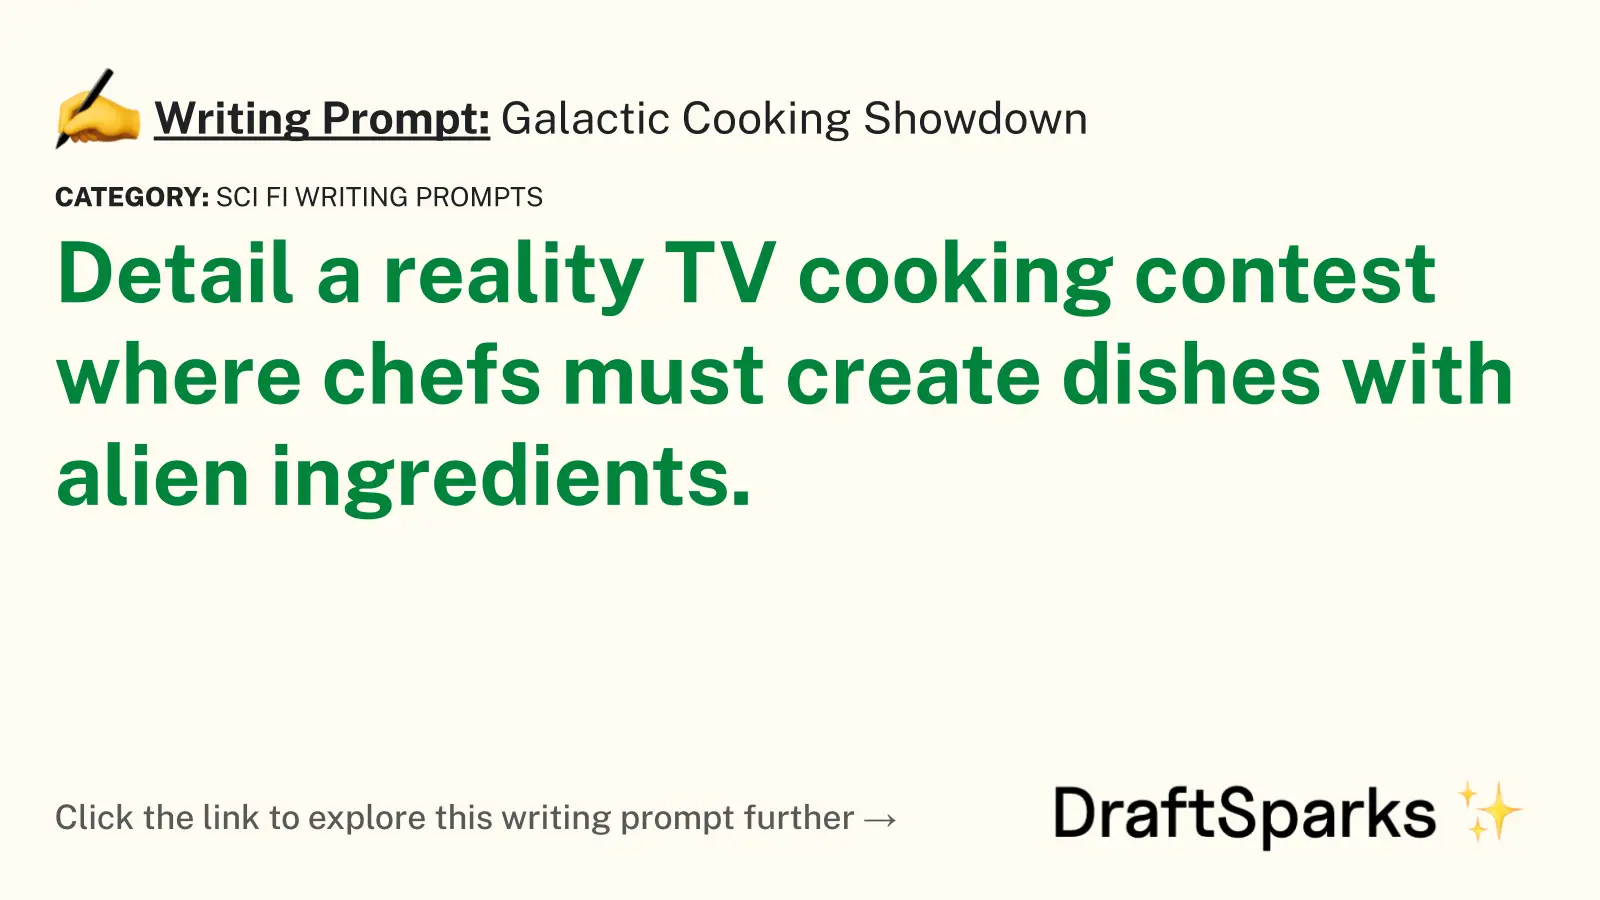 Galactic Cooking Showdown